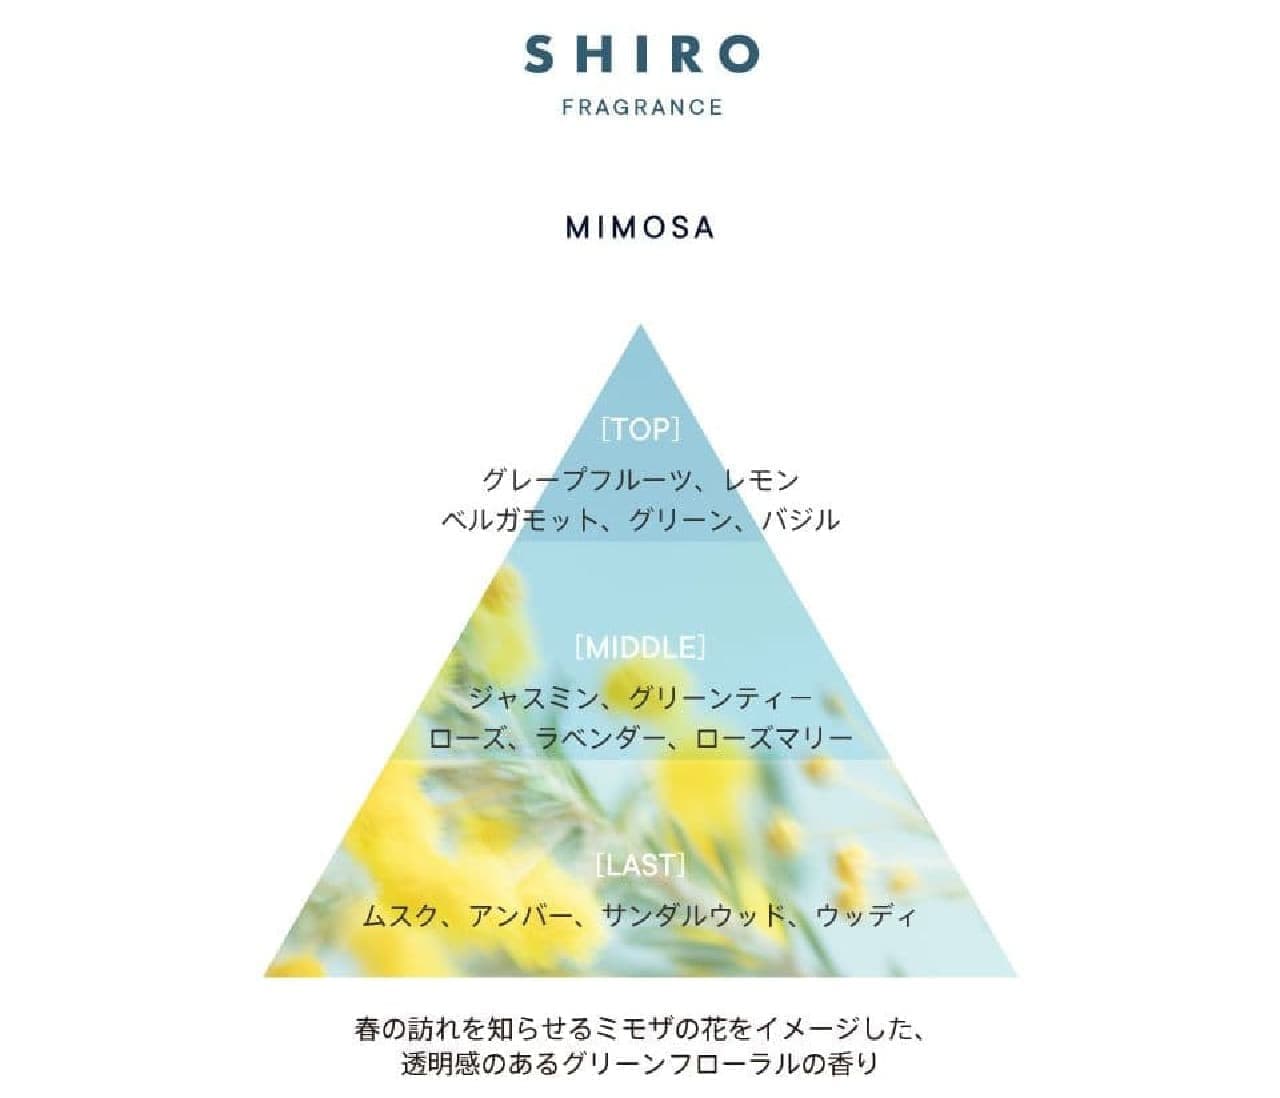 SHIRO Limited Edition Fragrance "Mimosa